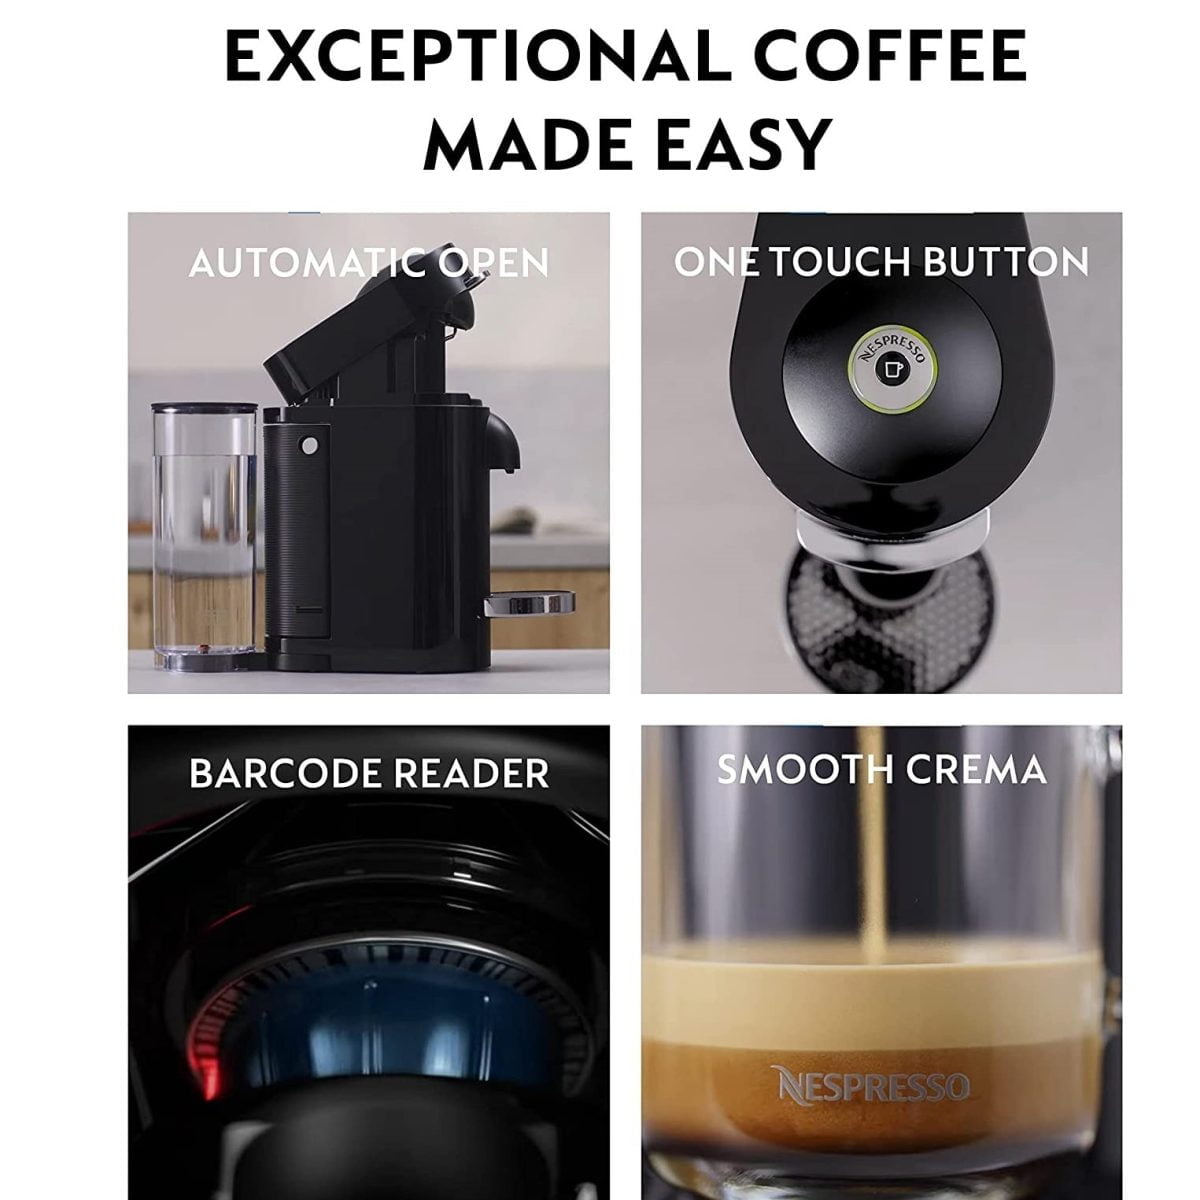 Nespresso Vertuo Plus Coffee Machine By Krups Black- Xn903840